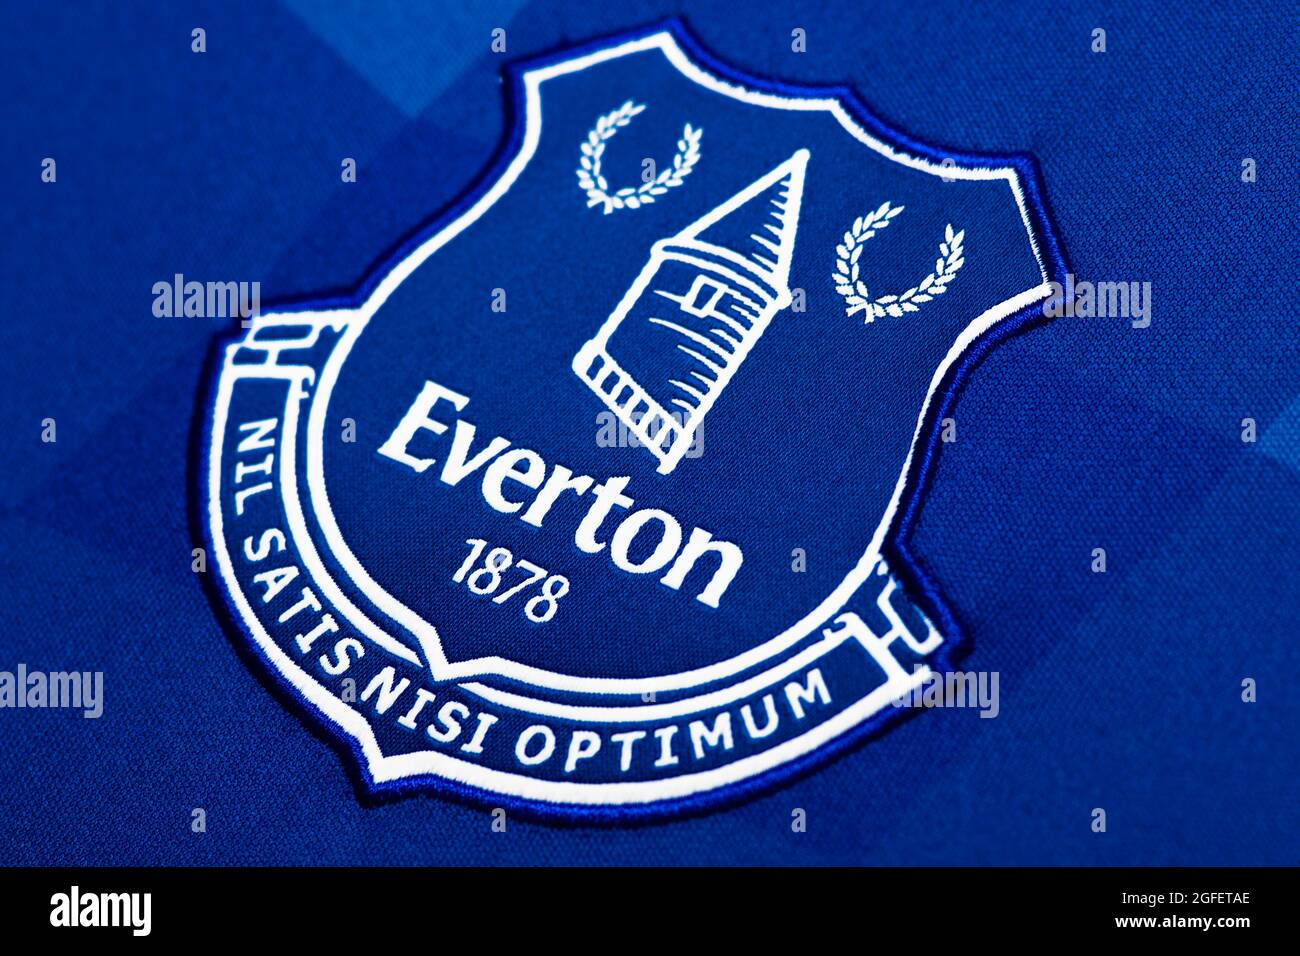 Close up of Everton FC kit 2020/21. Stock Photo